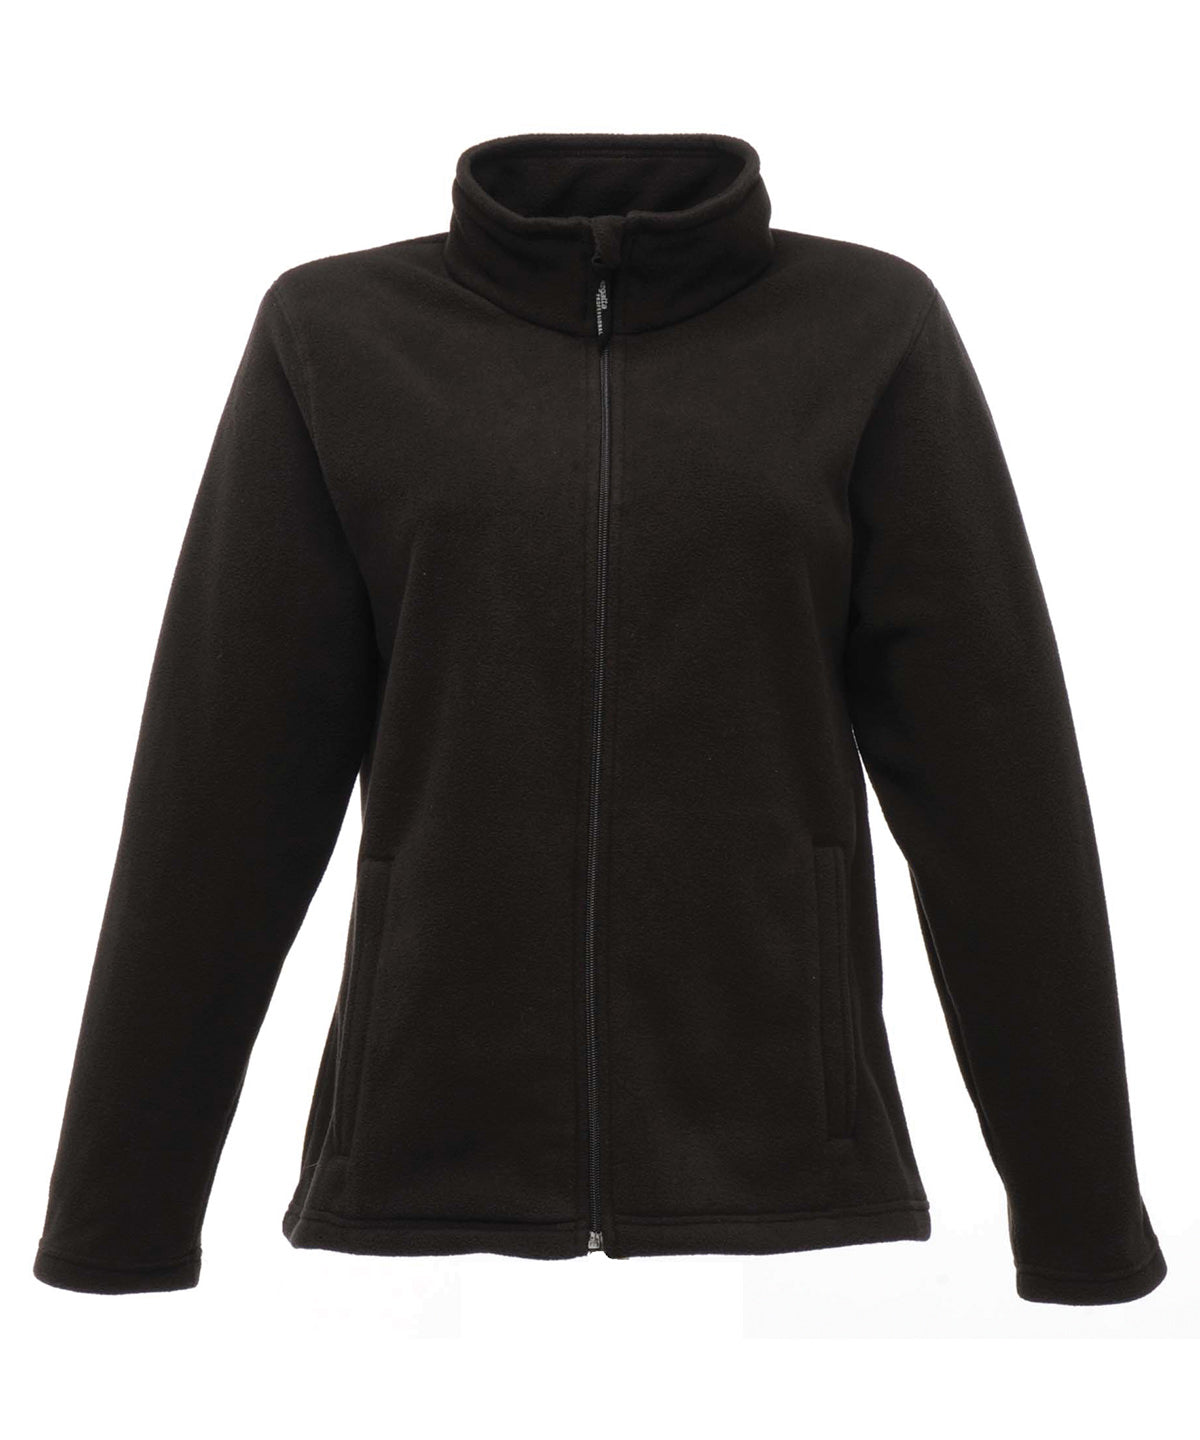 Personalised Jackets - Black Regatta Professional Women's full-zip microfleece